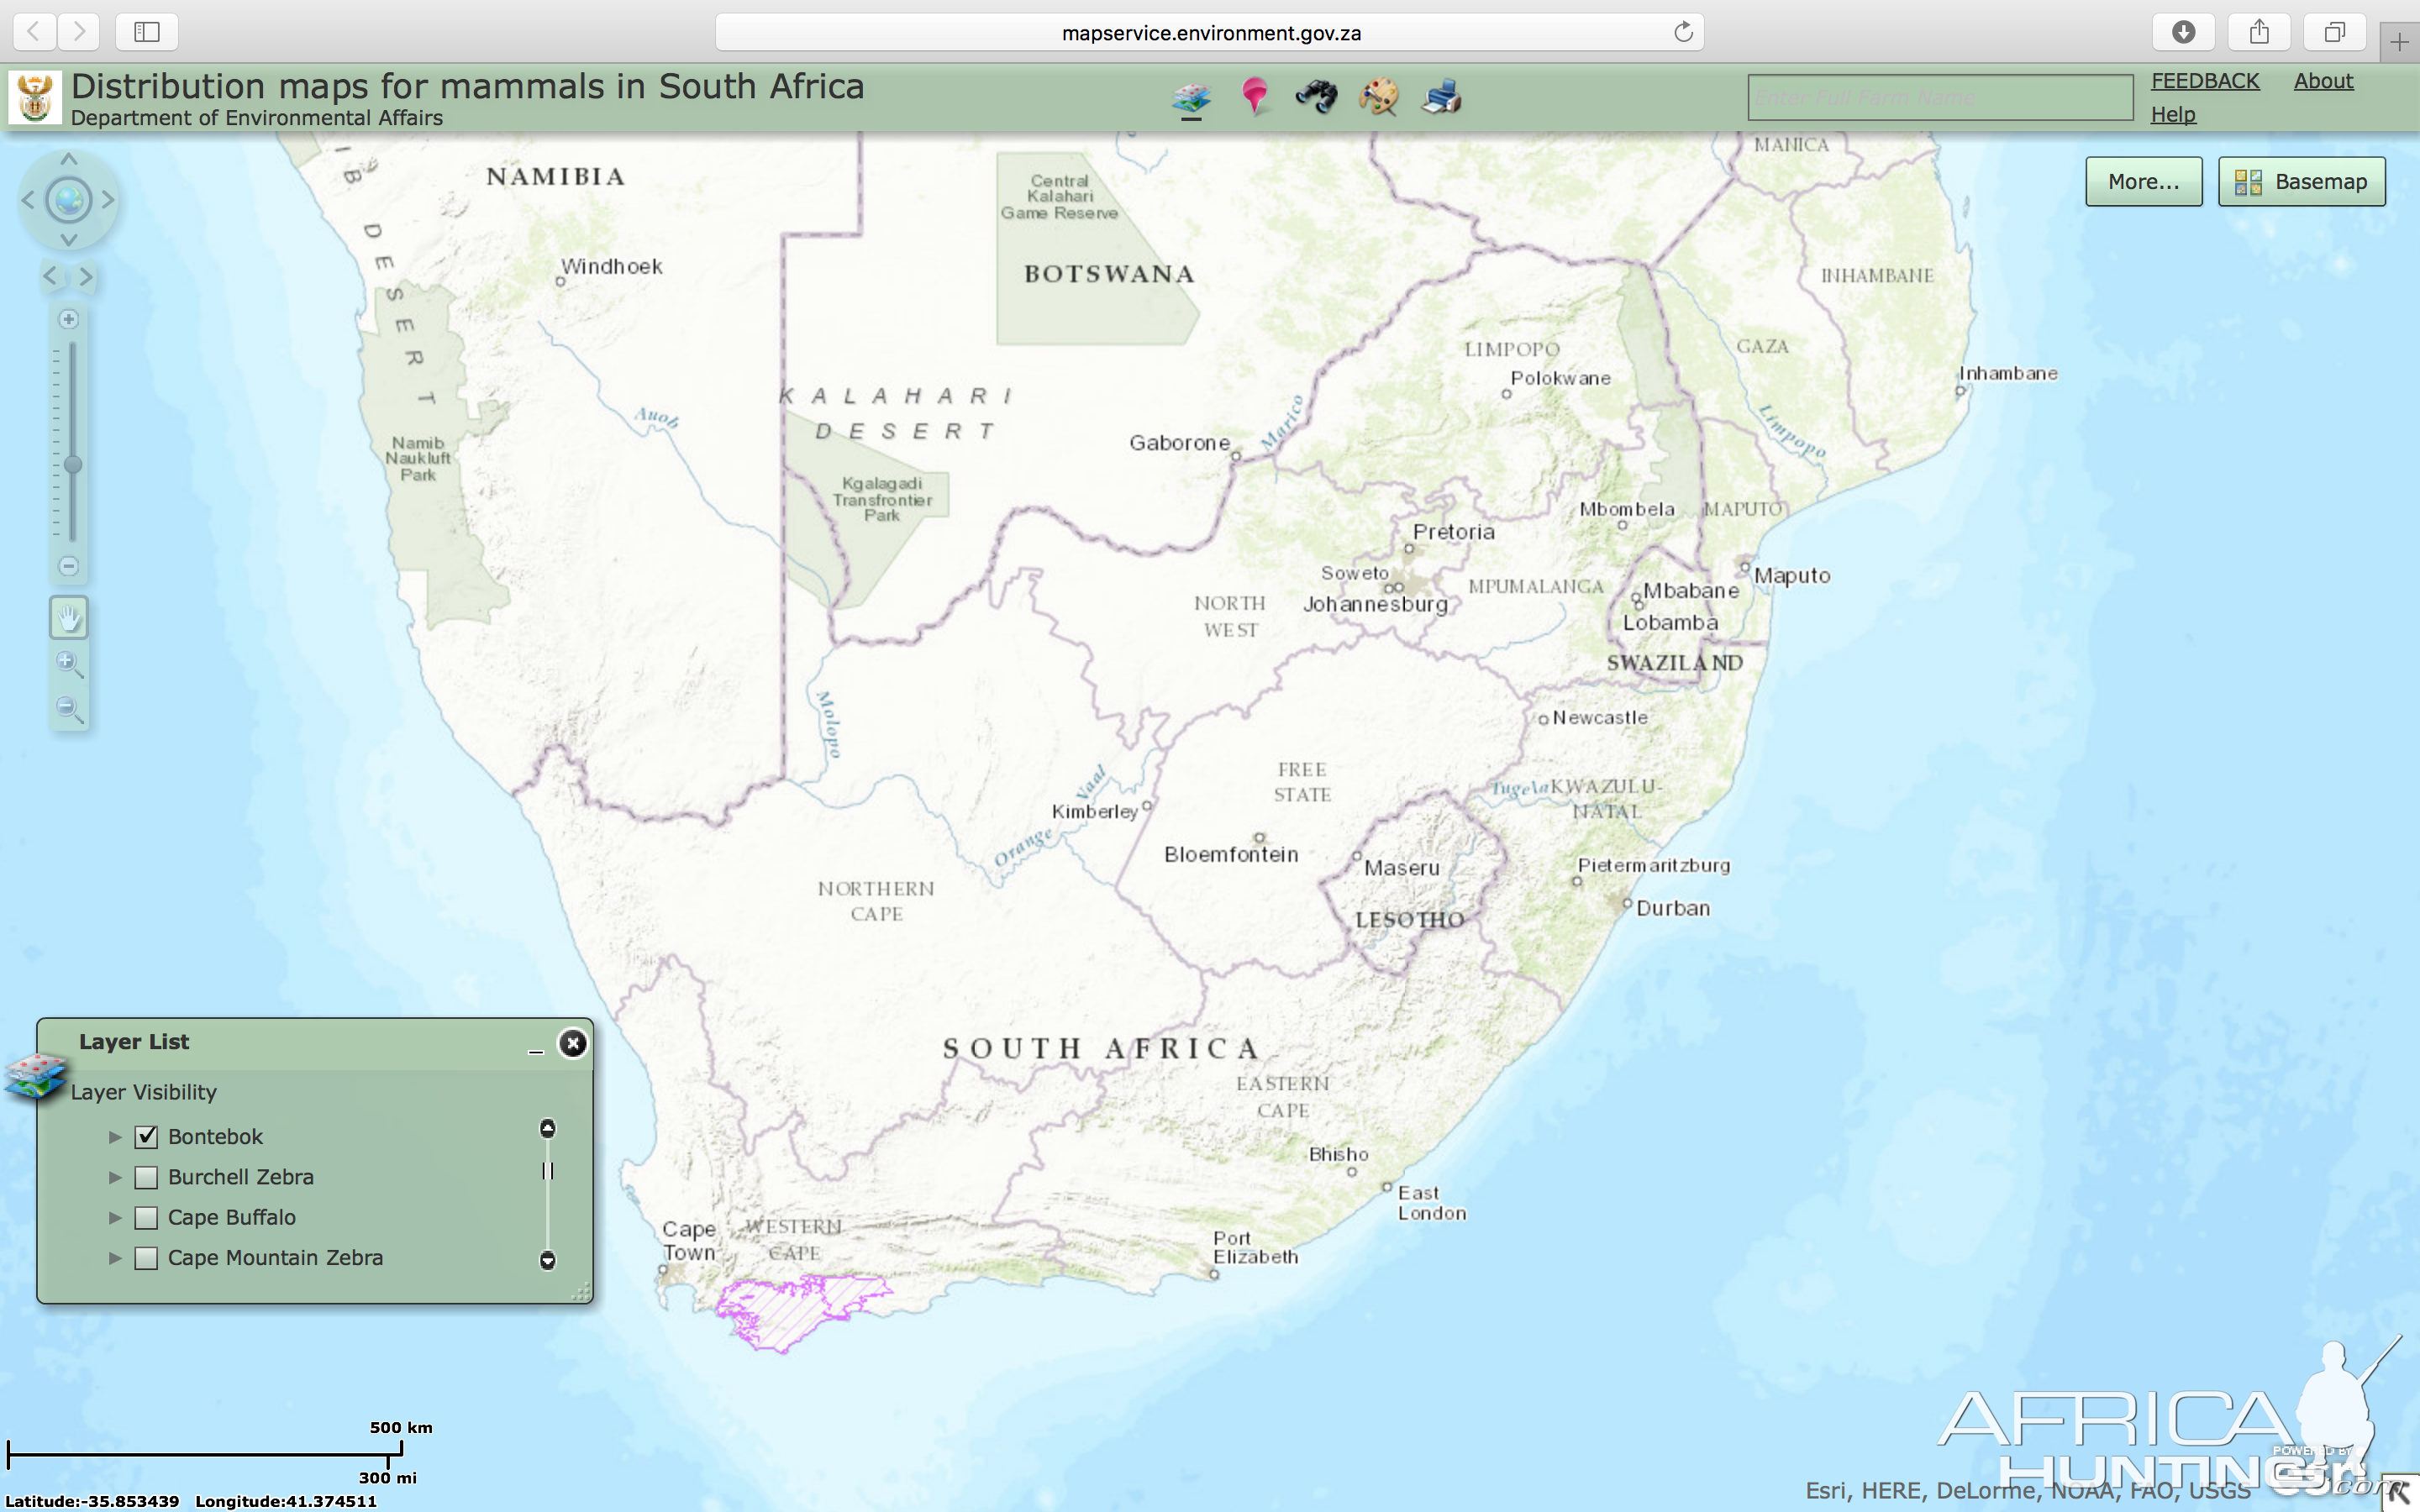 Bontebok Distribution Map South Africa